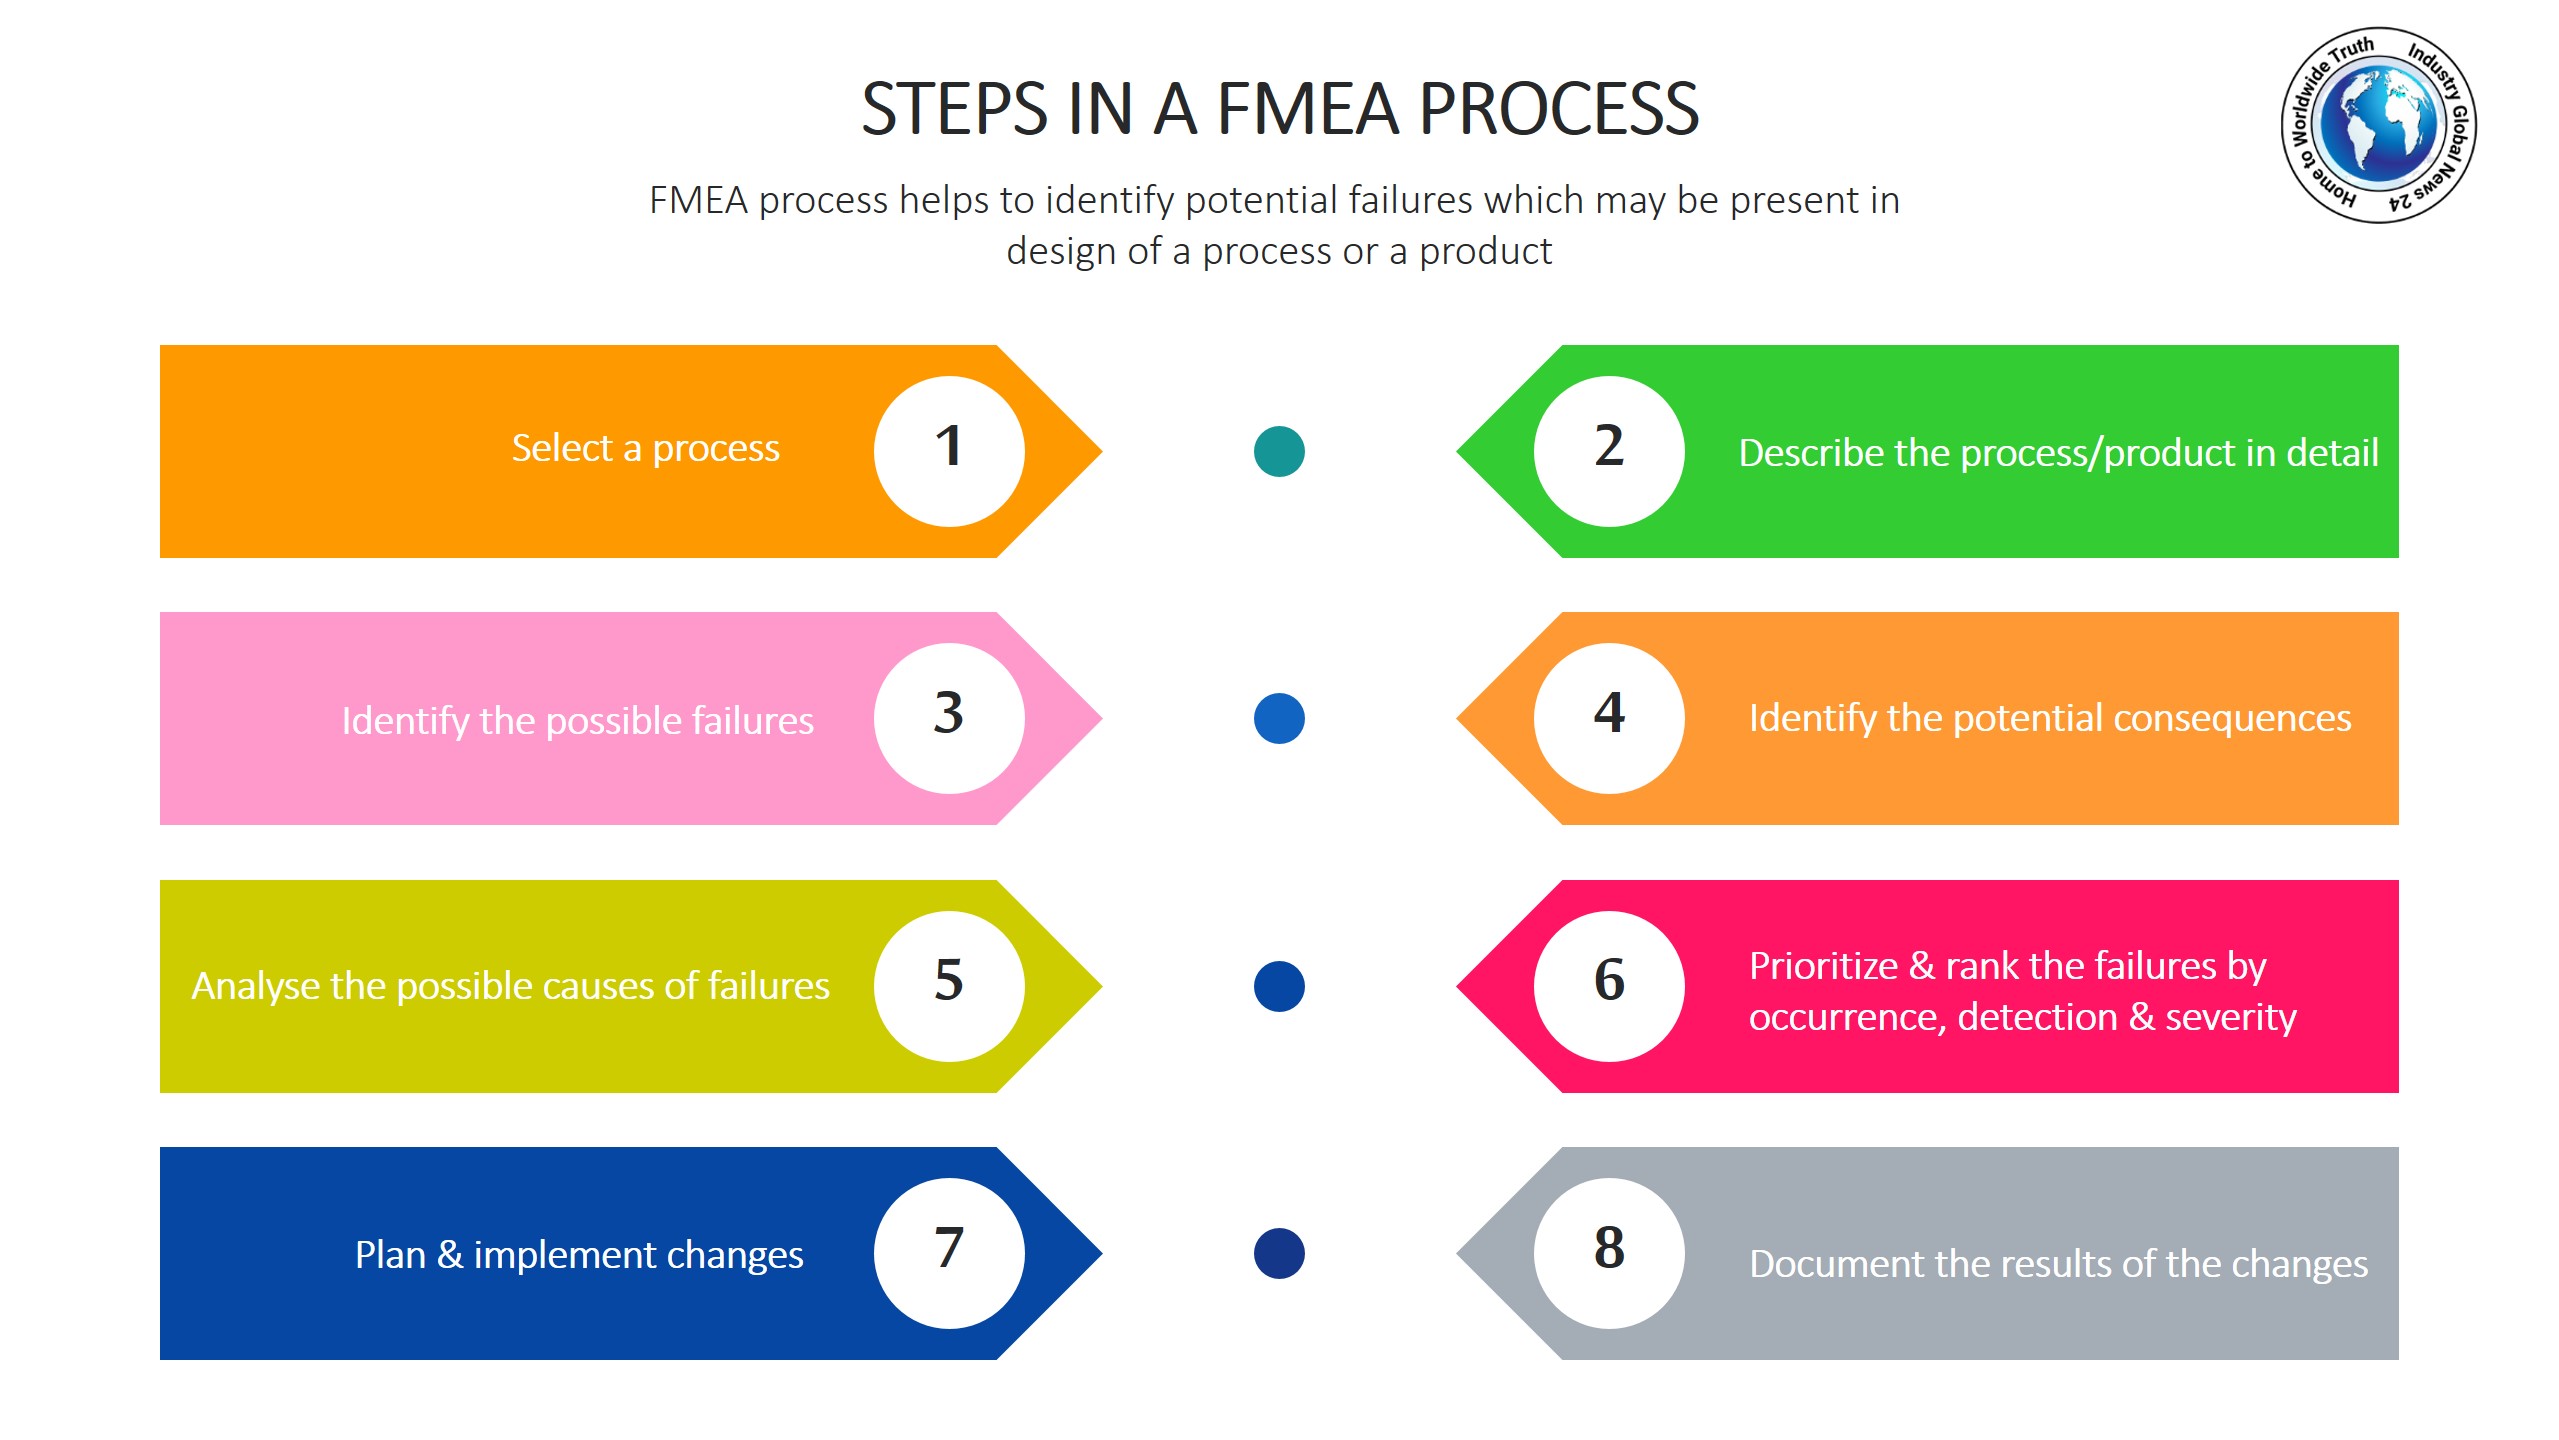 Steps in a FMEA process